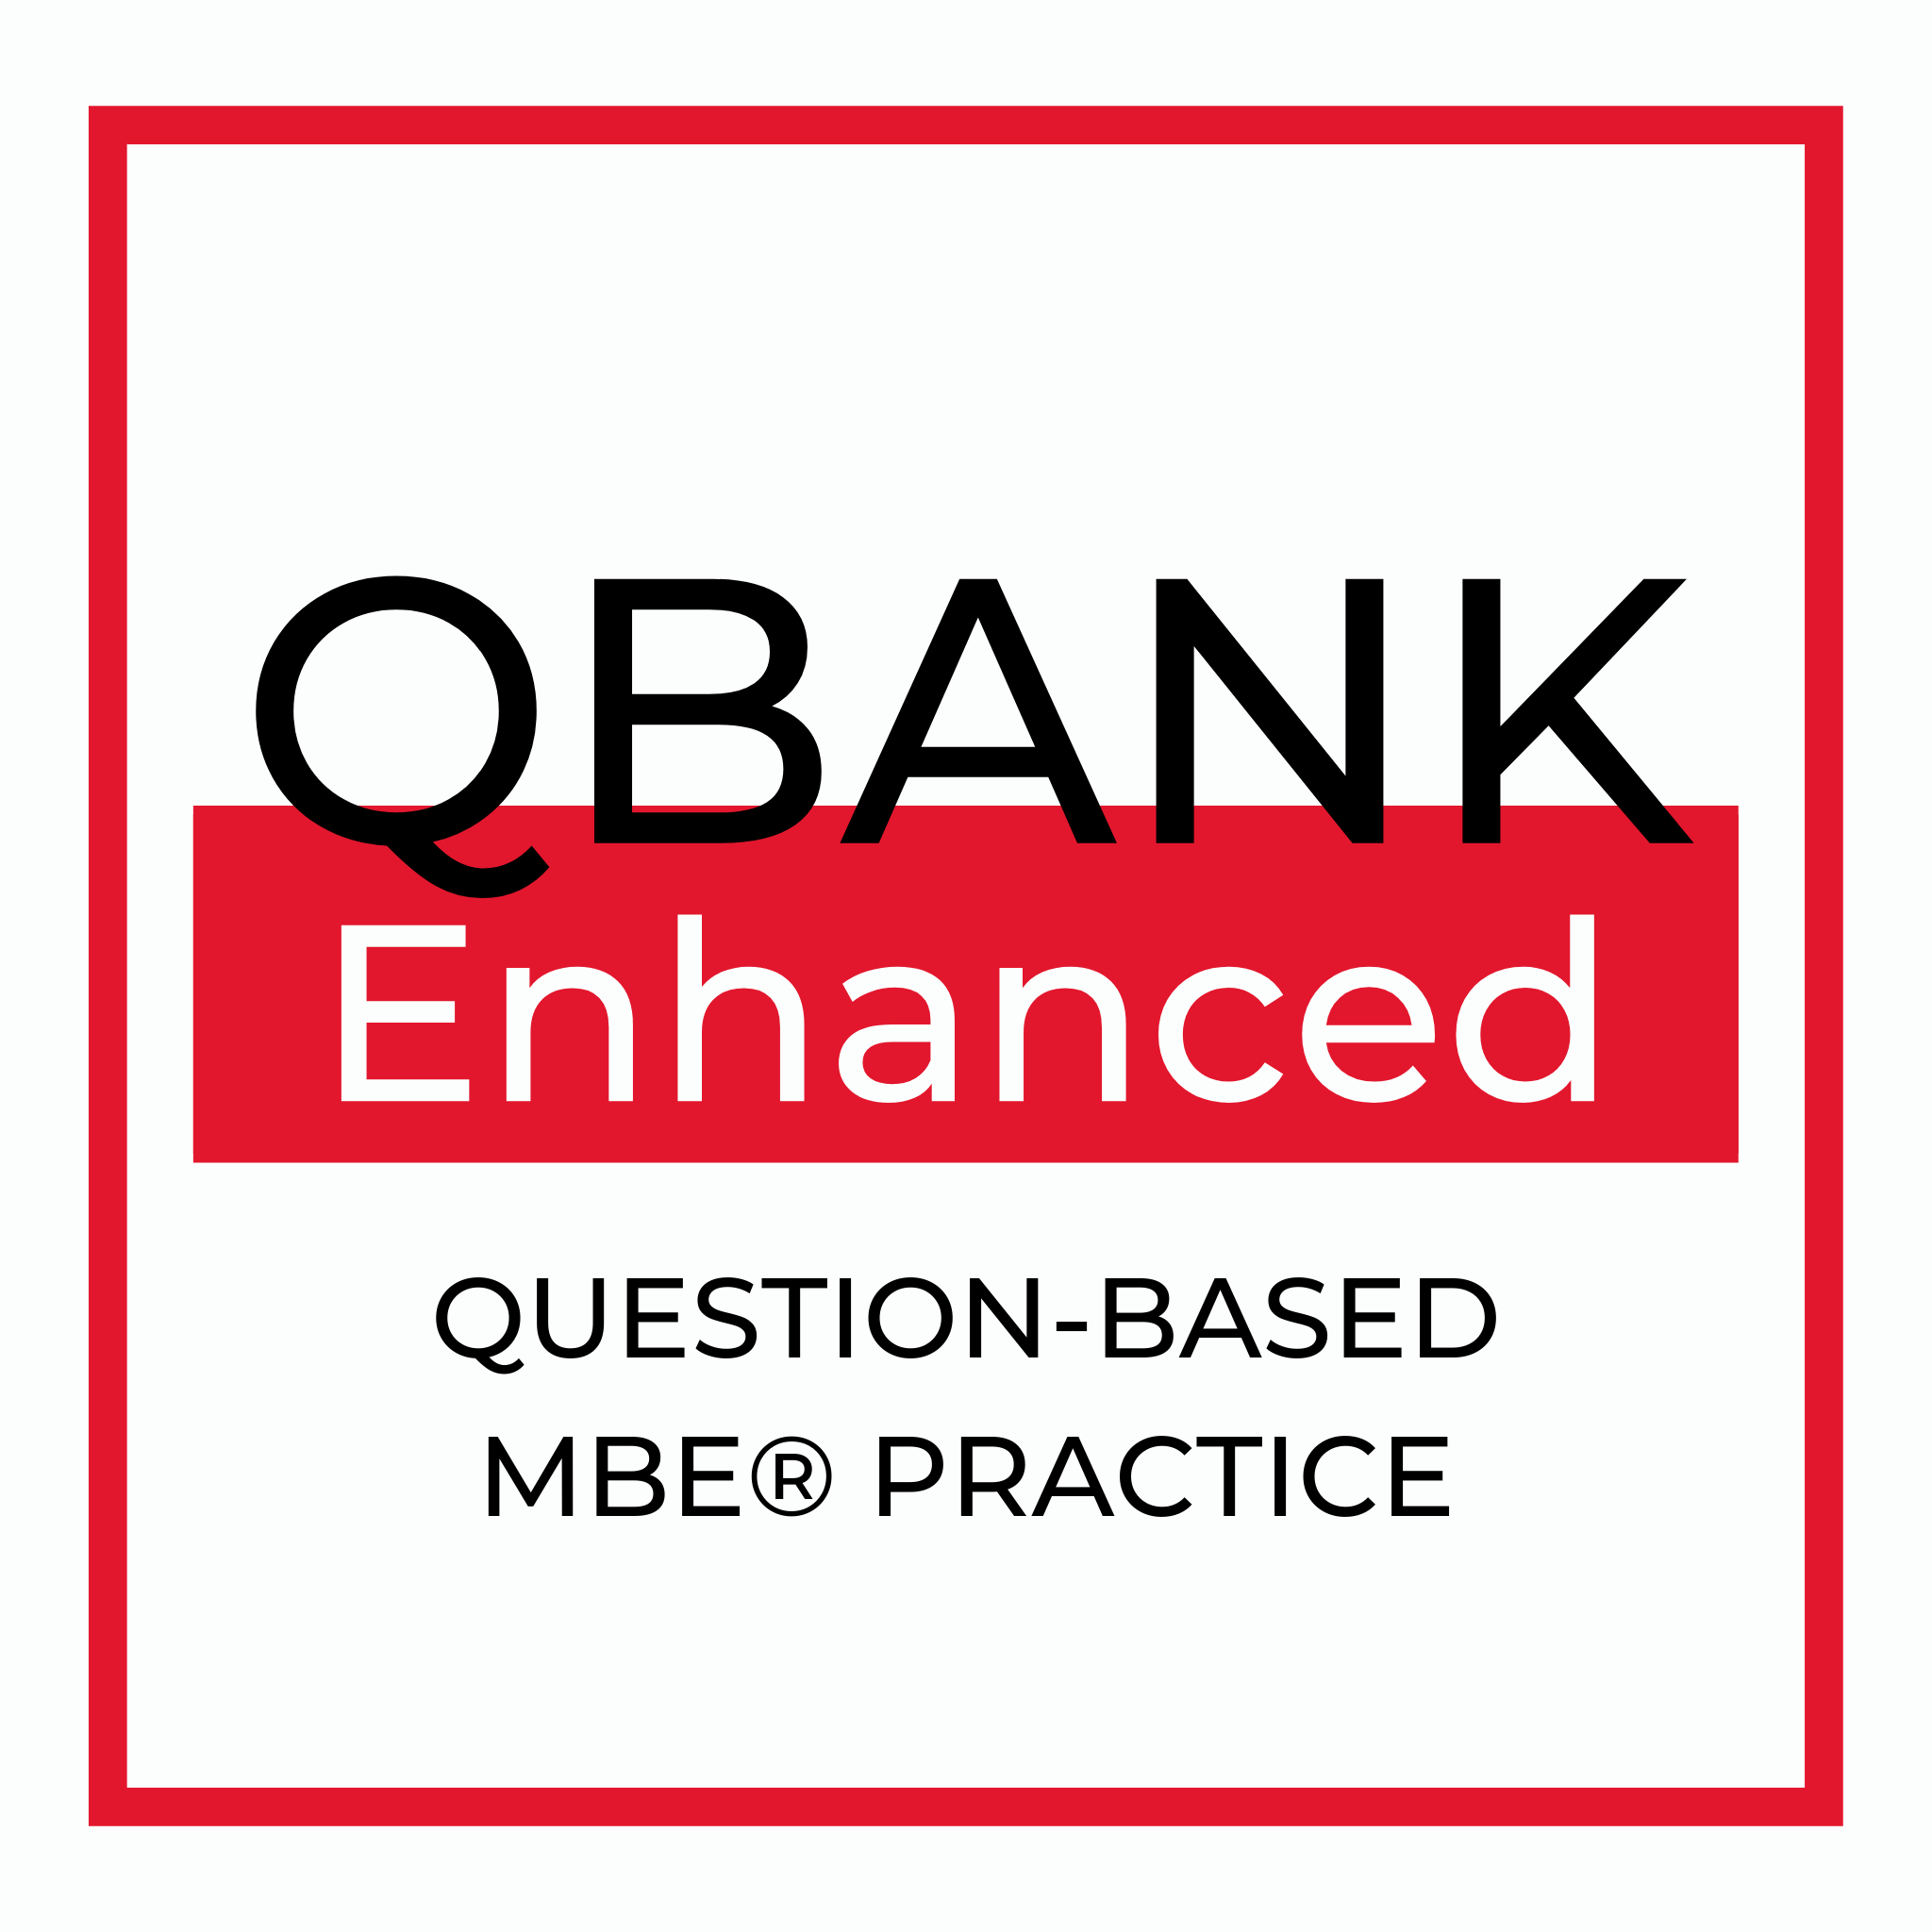 Qbank Enhanced